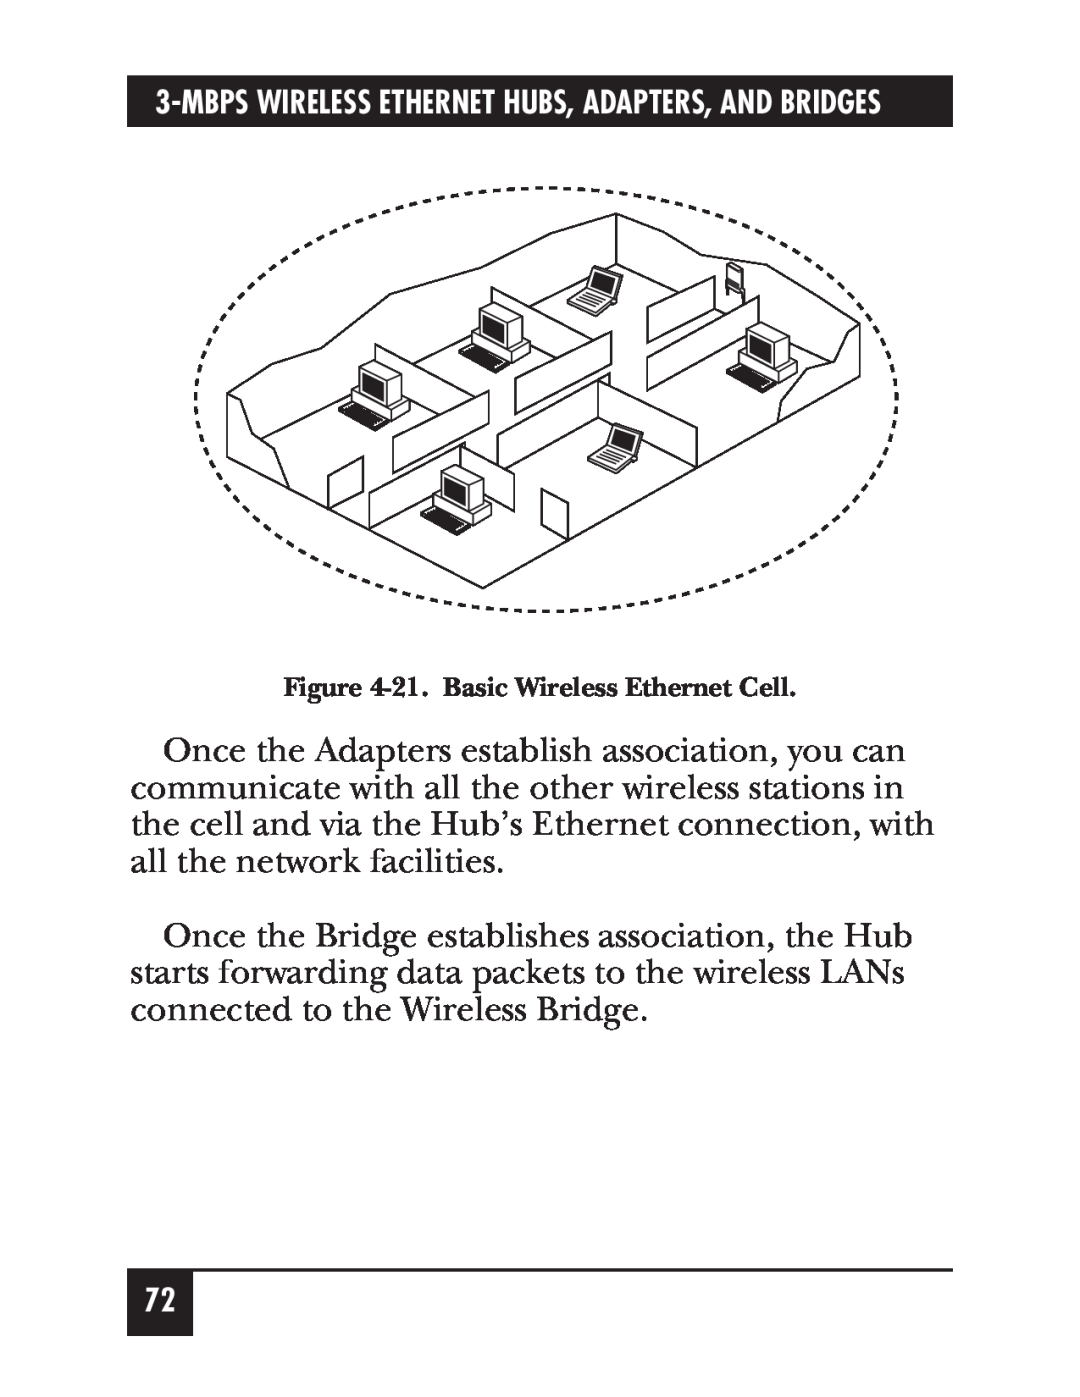 Black Box LW004A, LW012AE, LW011AE, LW008A, LW005A, LW009A, LW003A, LW002A, LW007A, LW010A 21. Basic Wireless Ethernet Cell 